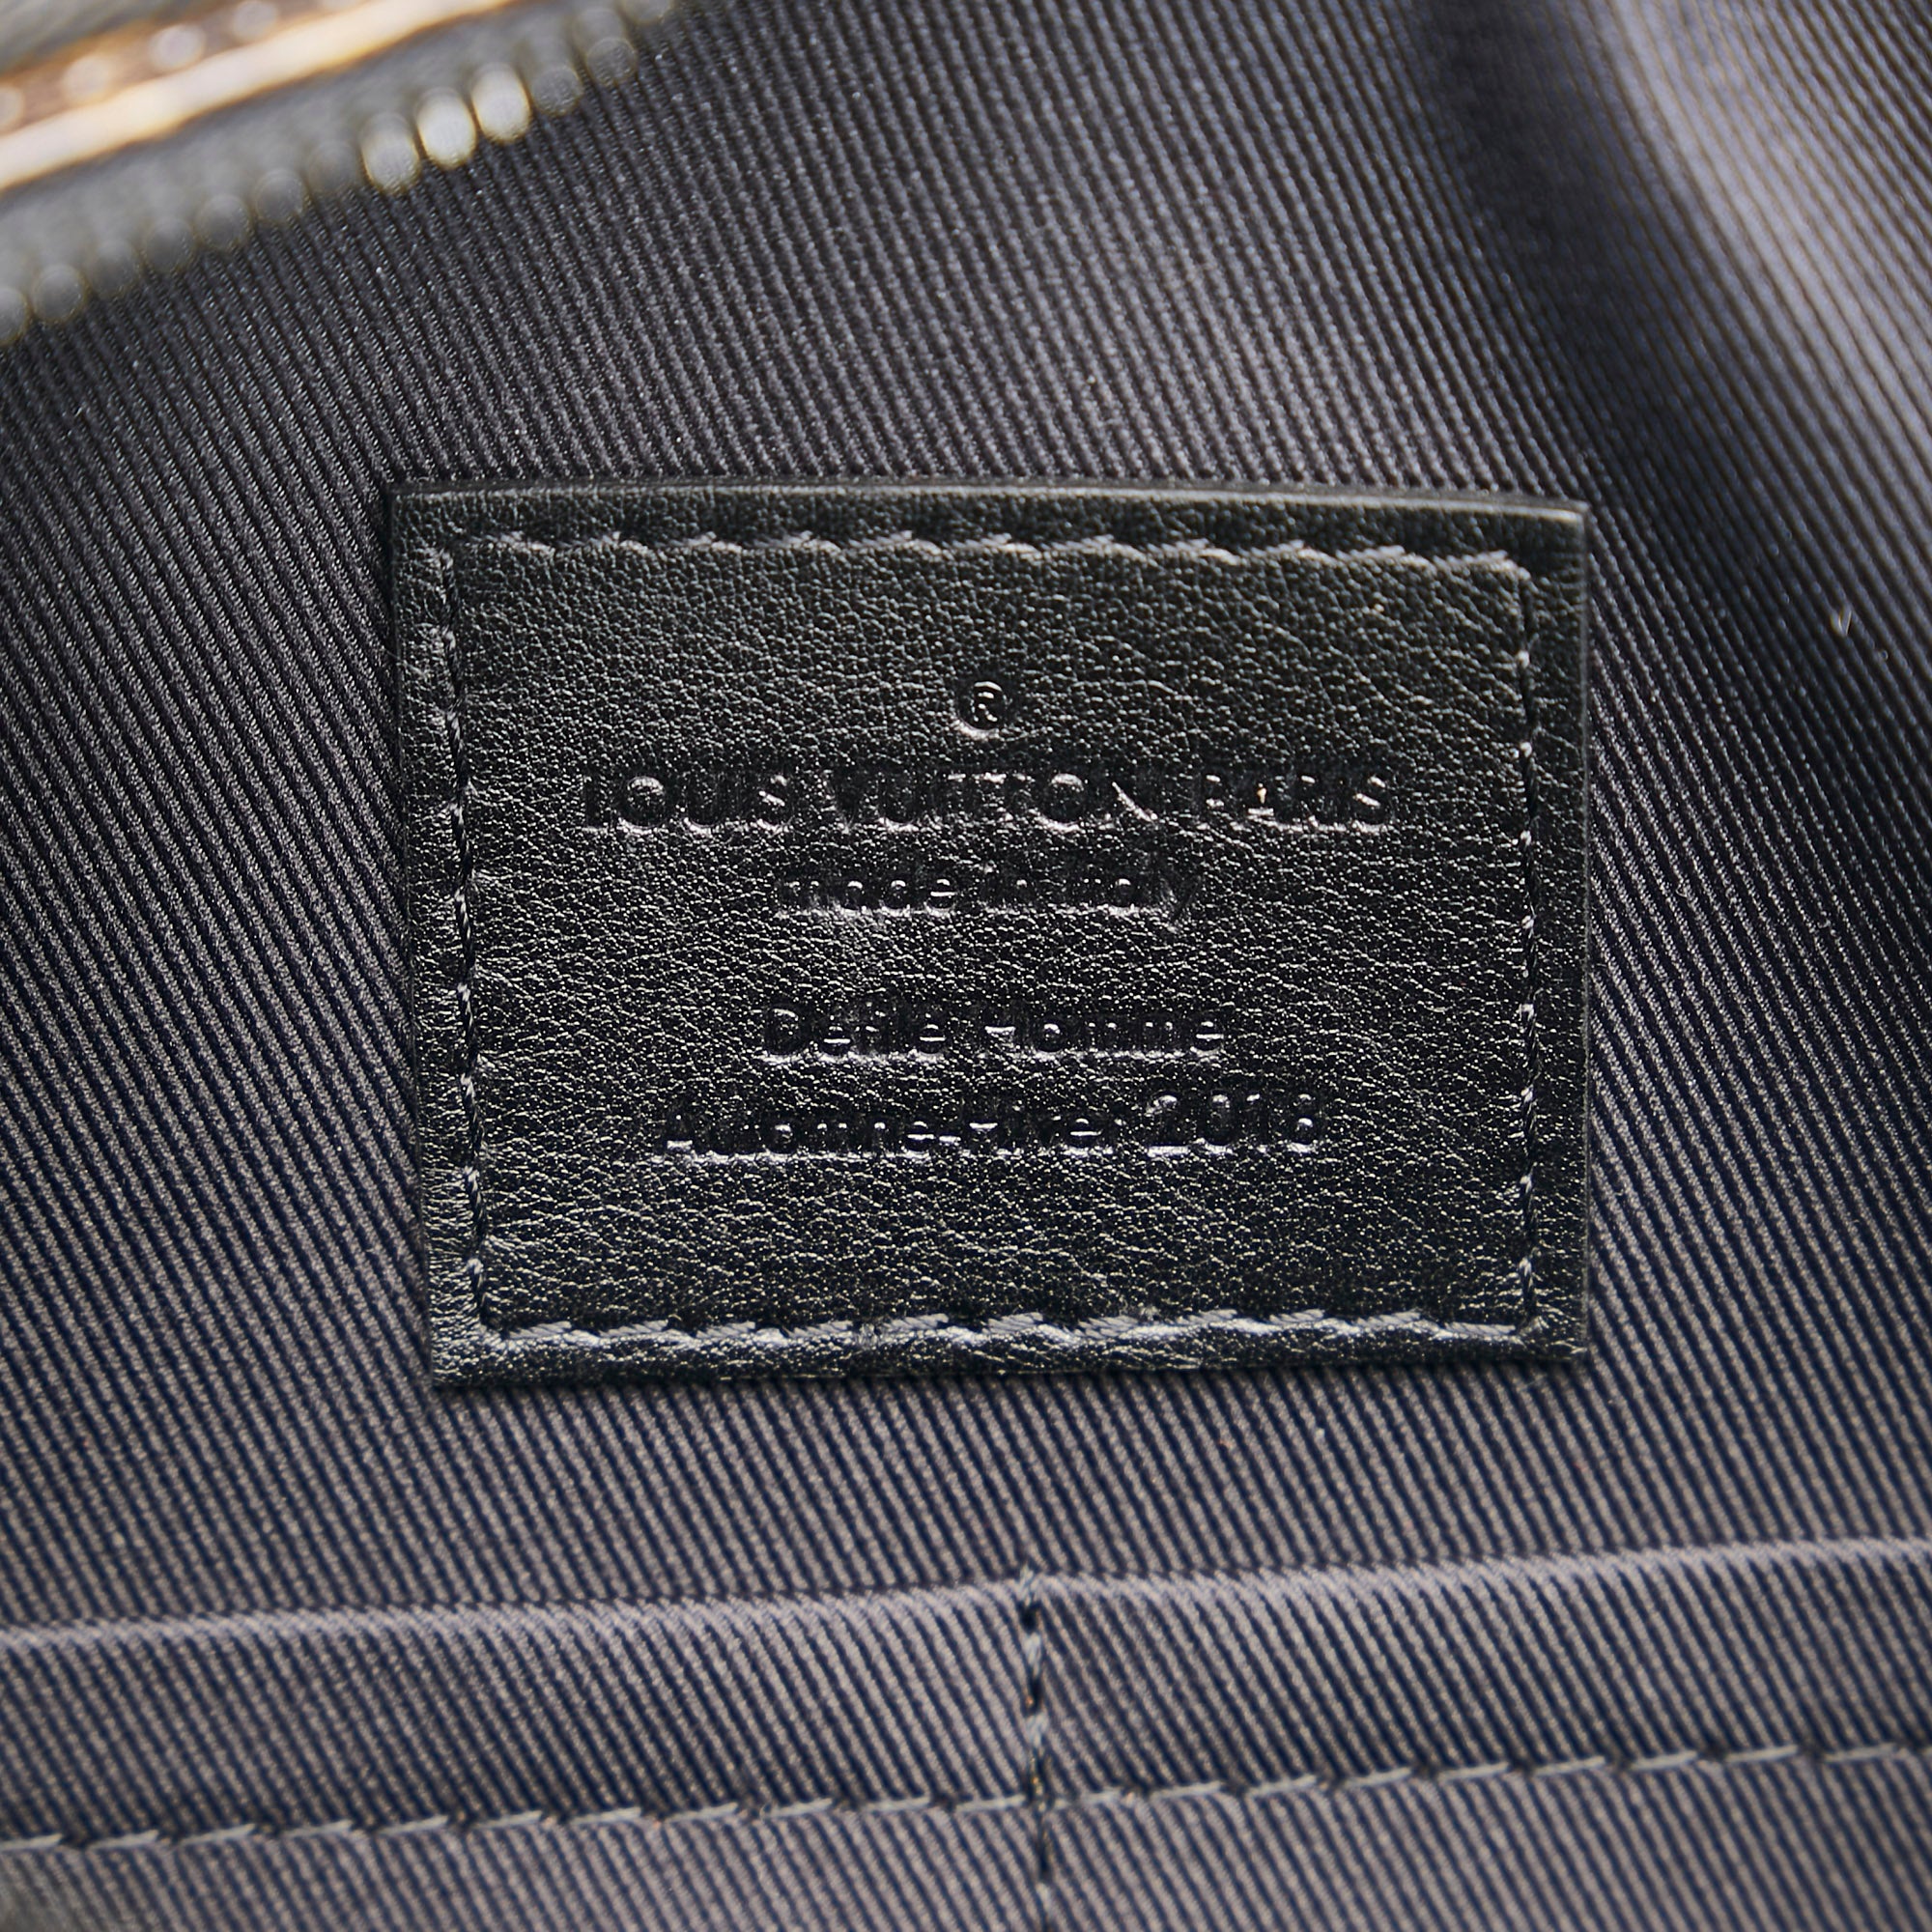 Brown Louis Vuitton Monogram Glaze Messenger PM Crossbody Bag